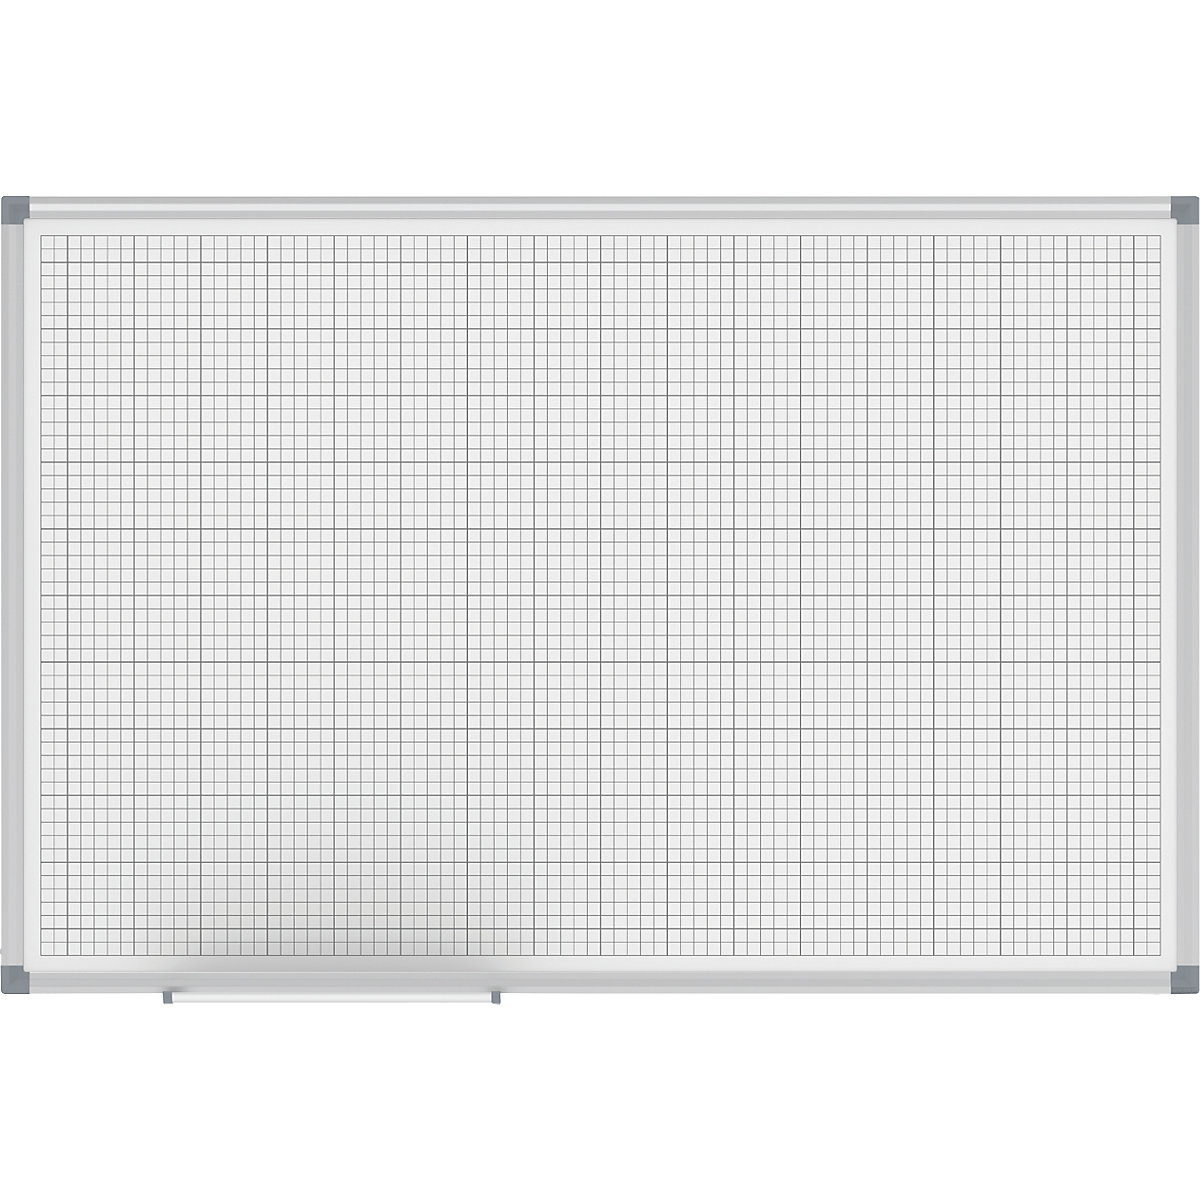 MAULstandard grid board, white - MAUL